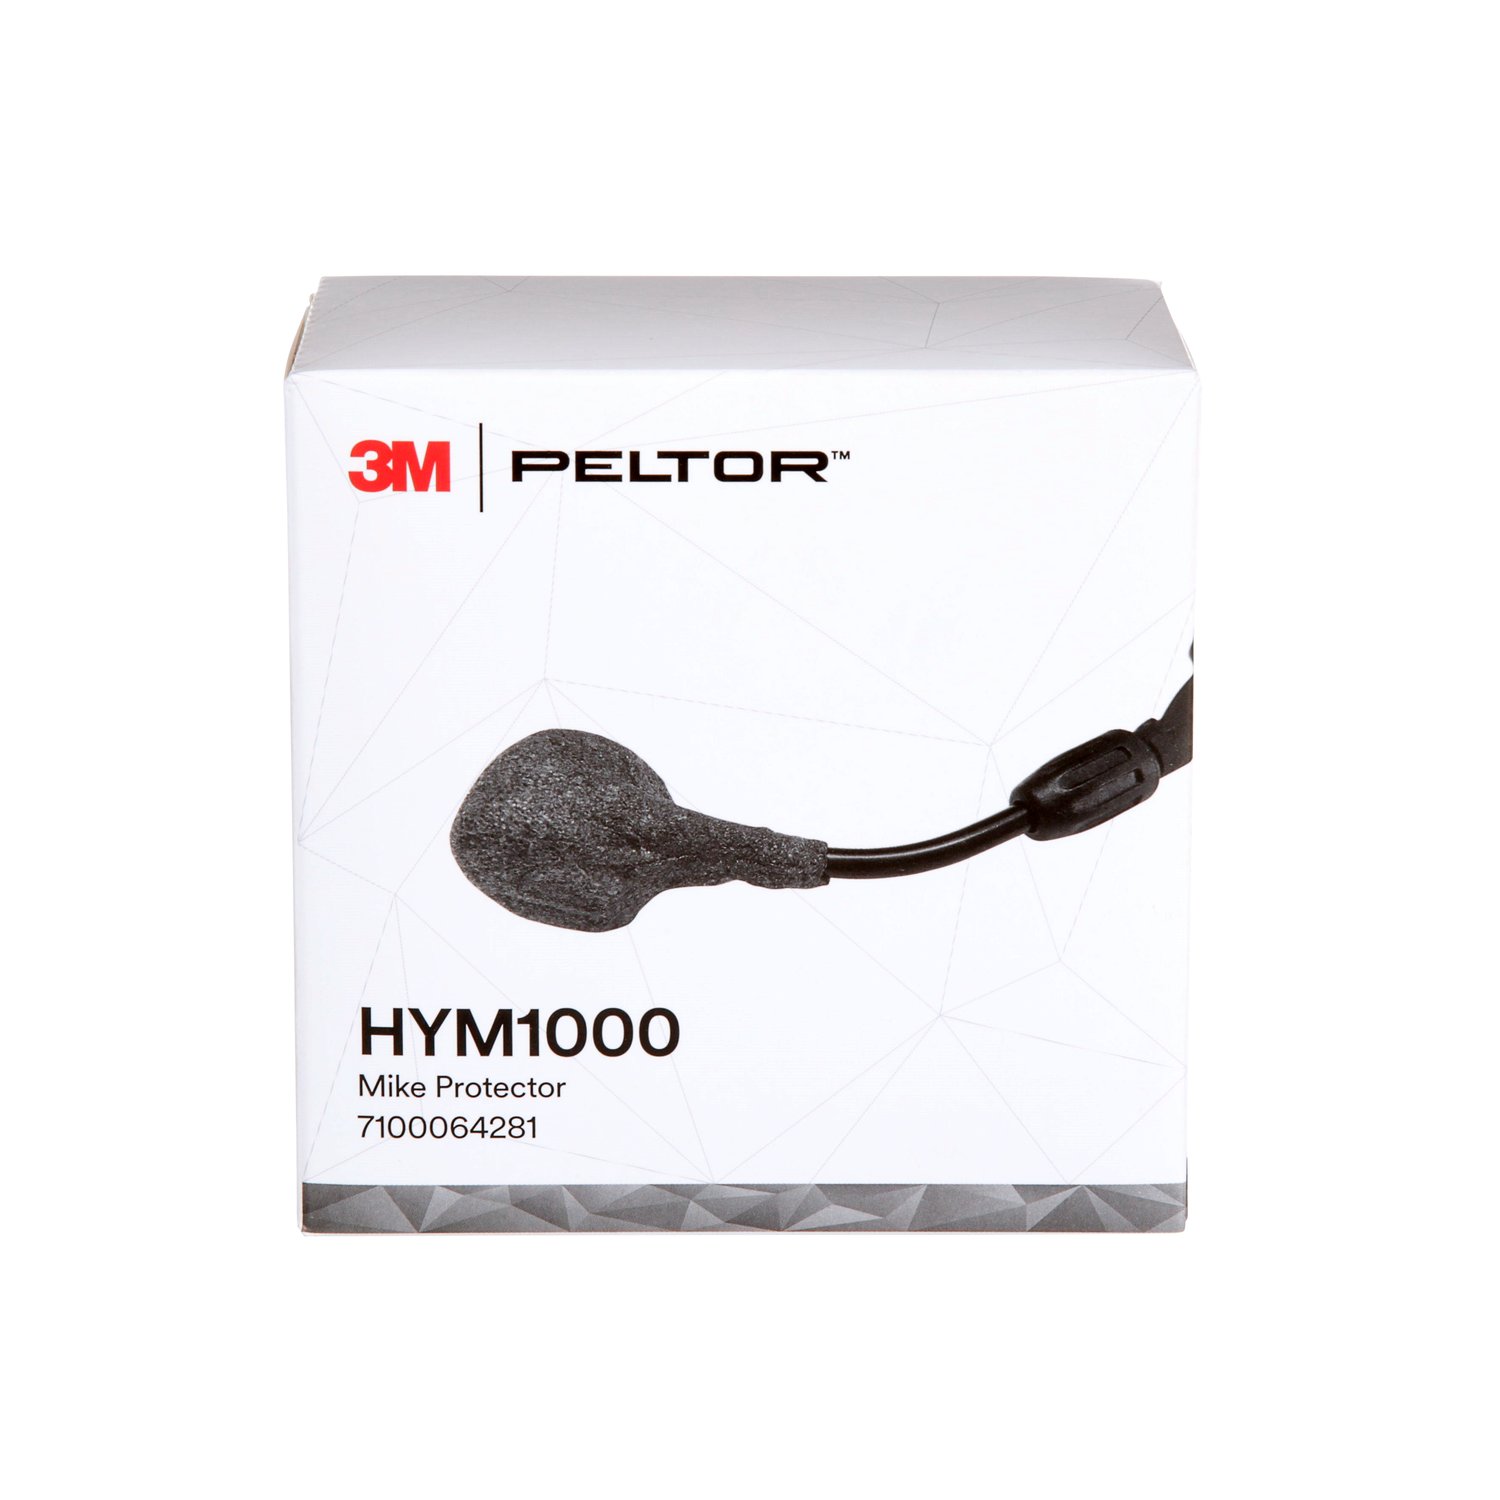 7100064281 - 3M PELTOR Hygiene Tape for Microphone, HYM1000, 4.5 M, 96 ea/Case